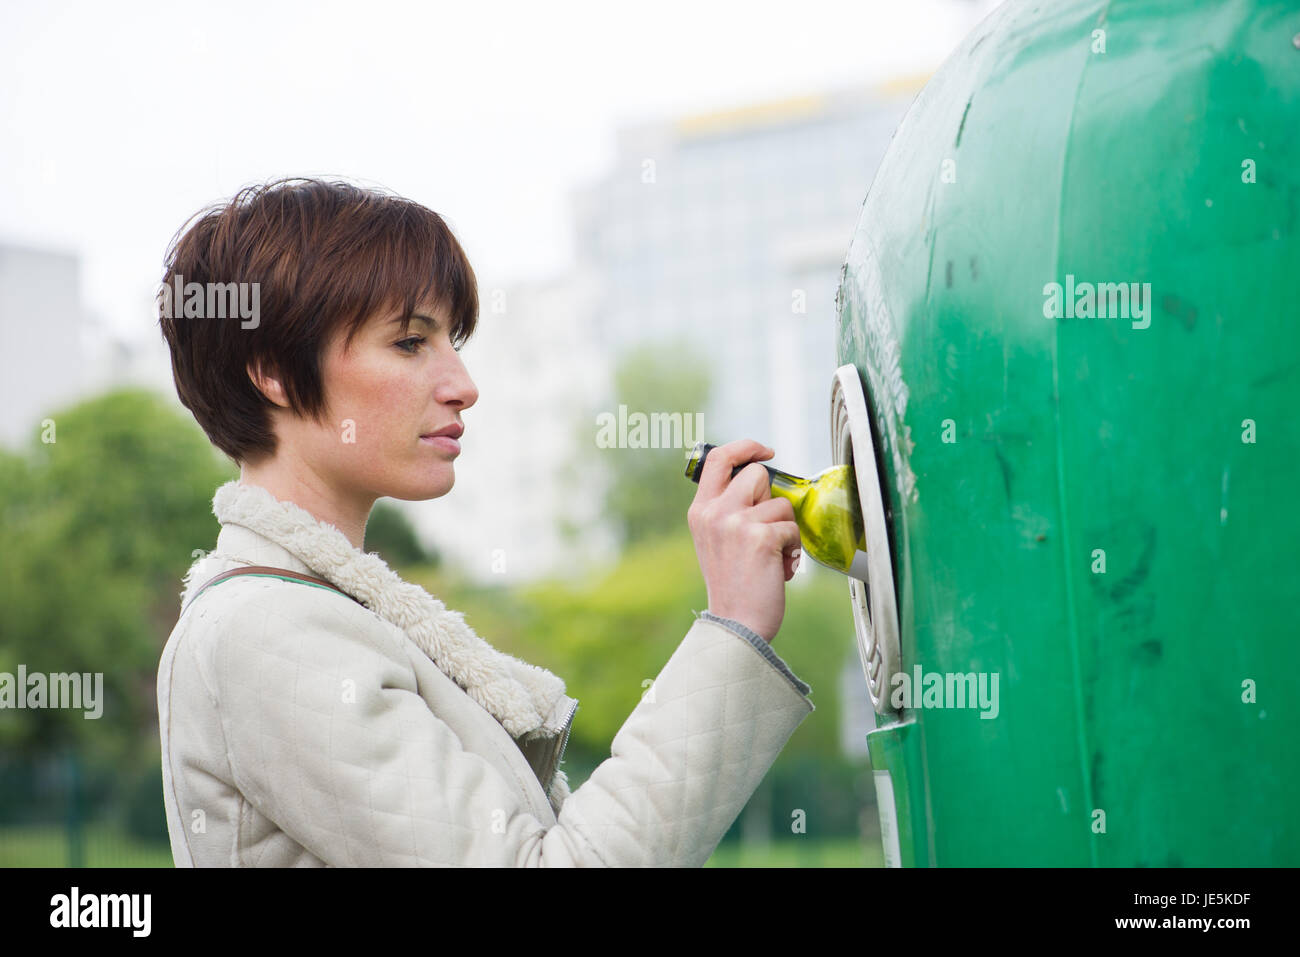 Woman putting wine bottle into recycling bin Stock Photo